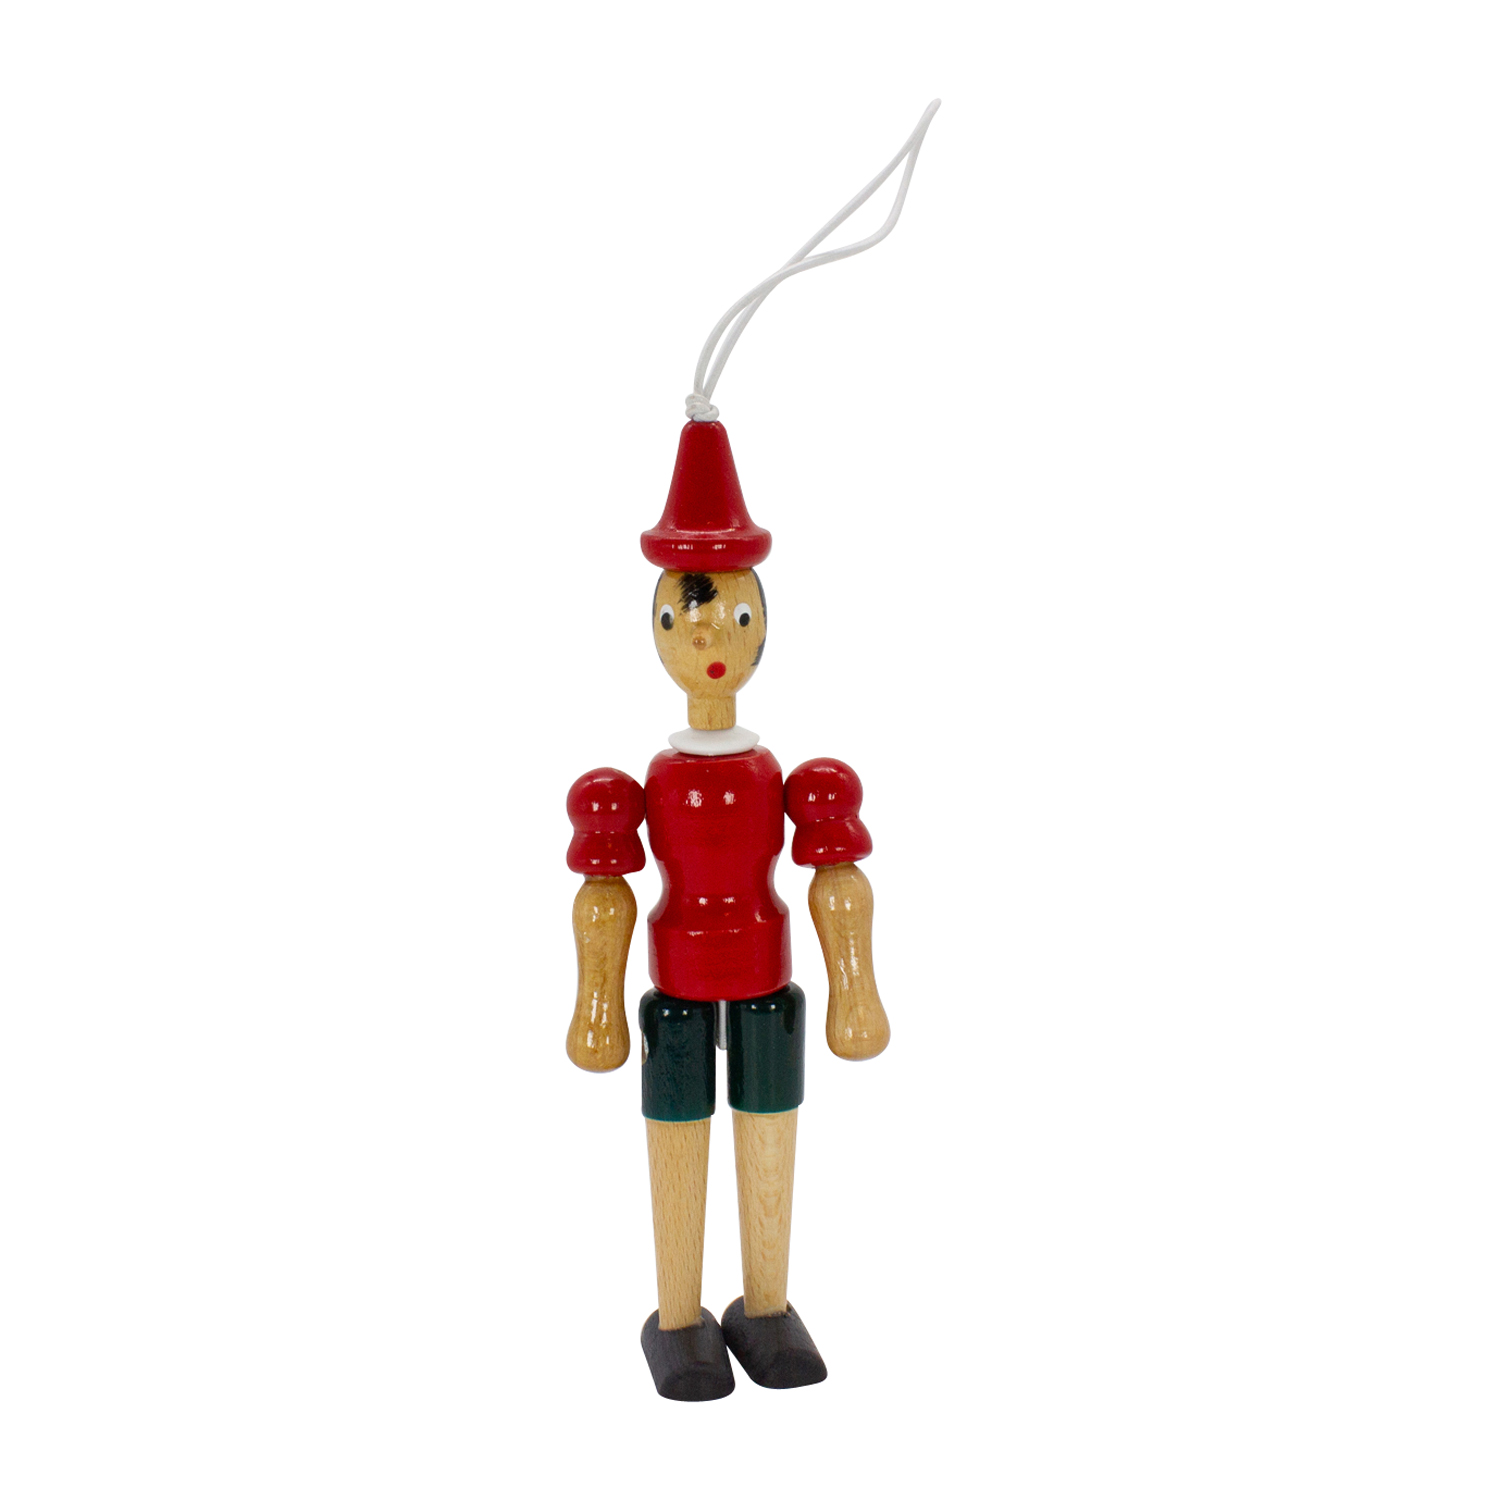 Pinocchio Figur aus Holz mit Gummiband, Länge 15 cm + 6,5 cm Gummiband 9010